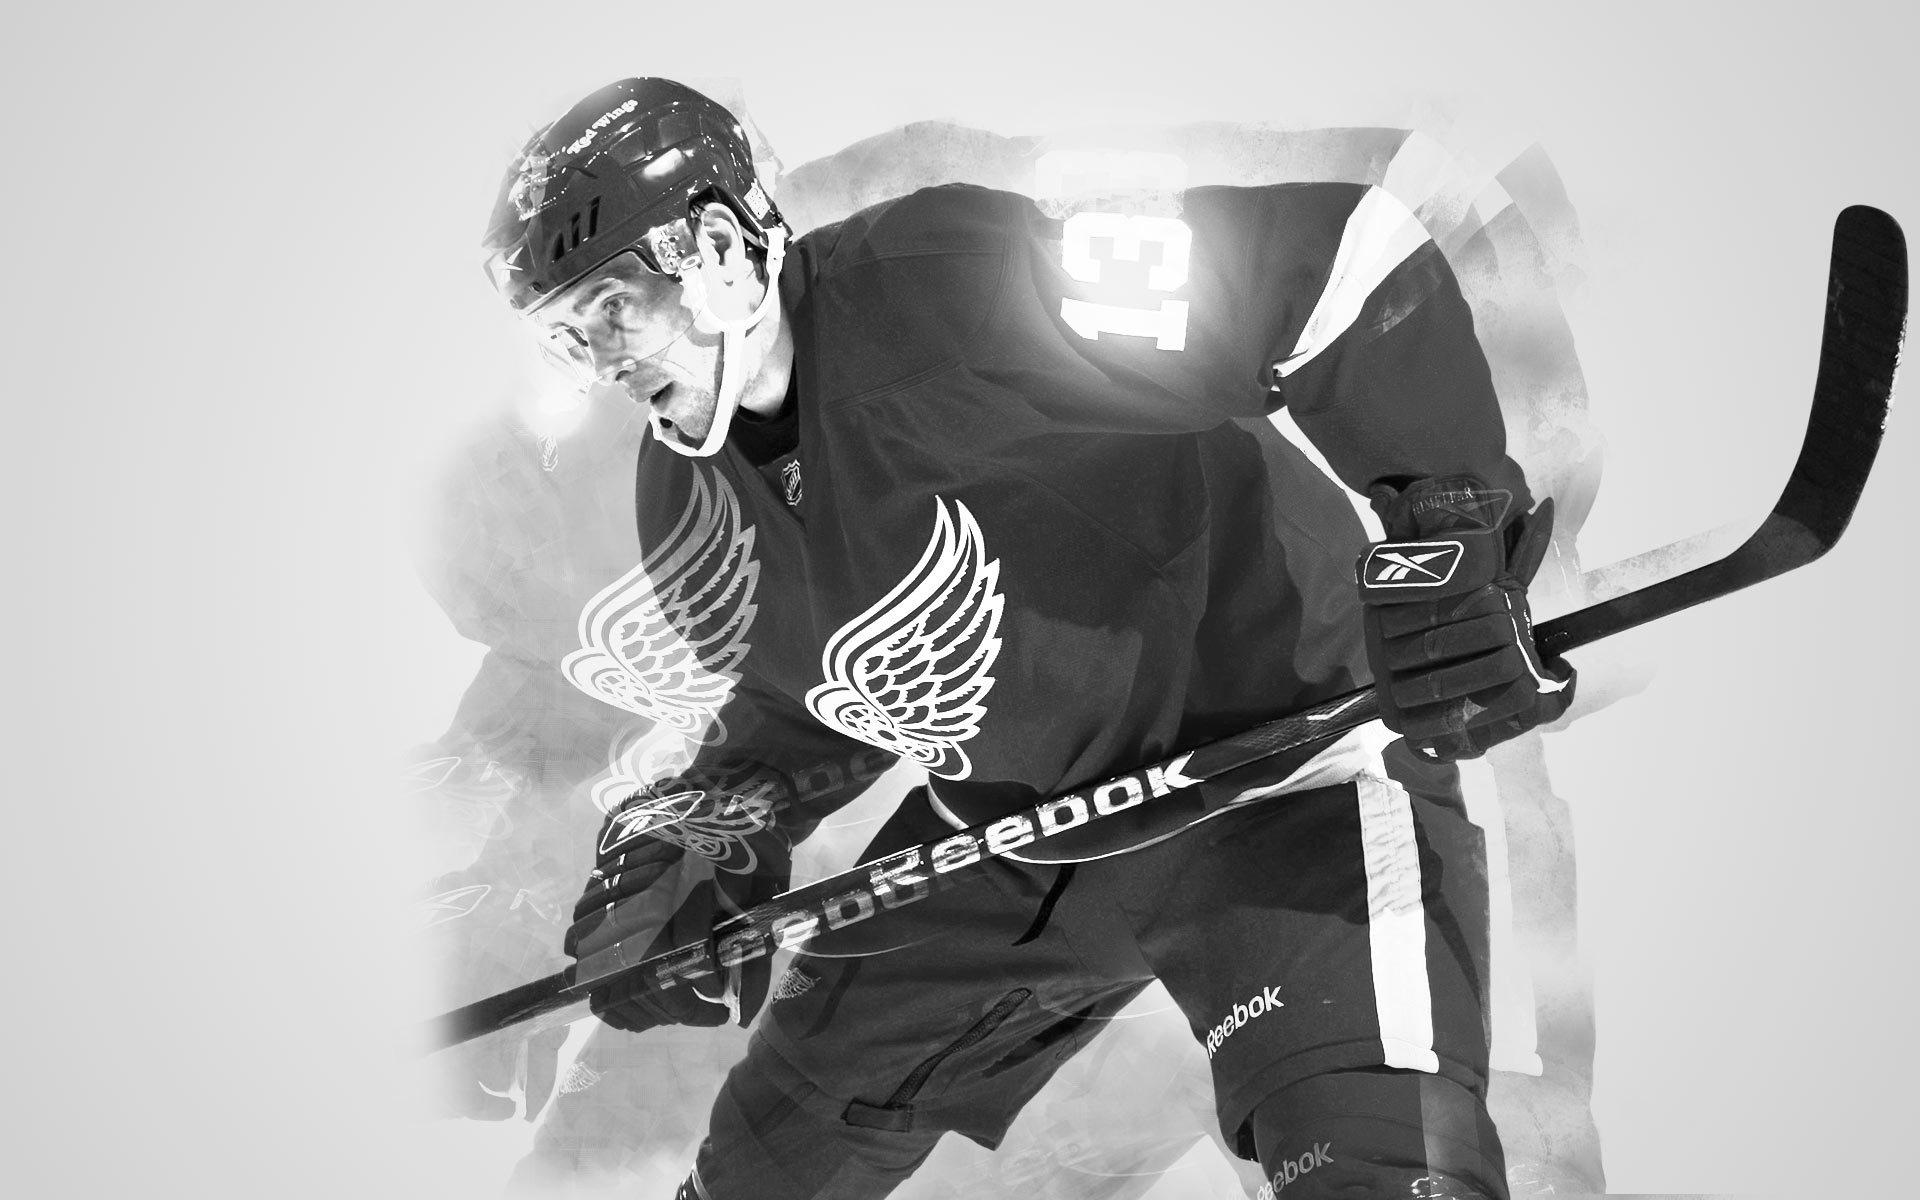 NHL player Pavel Datsyuk wallpaper and image